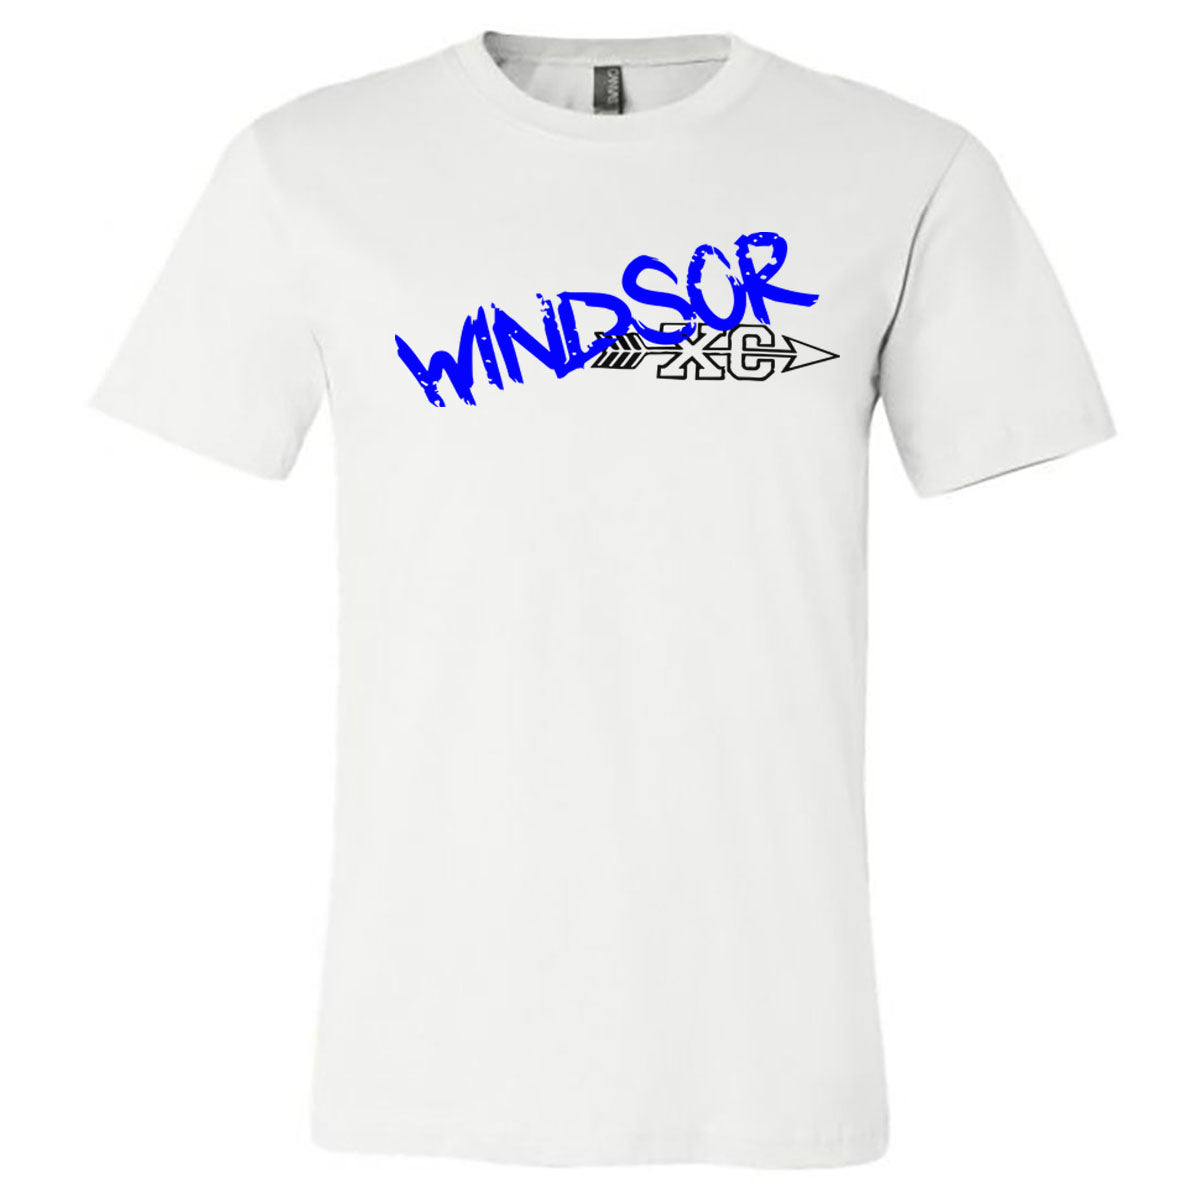 Windsor - Windsor XC Beast Mode - White (Tee/DriFit/Hoodie/Sweatshirt) - Southern Grace Creations